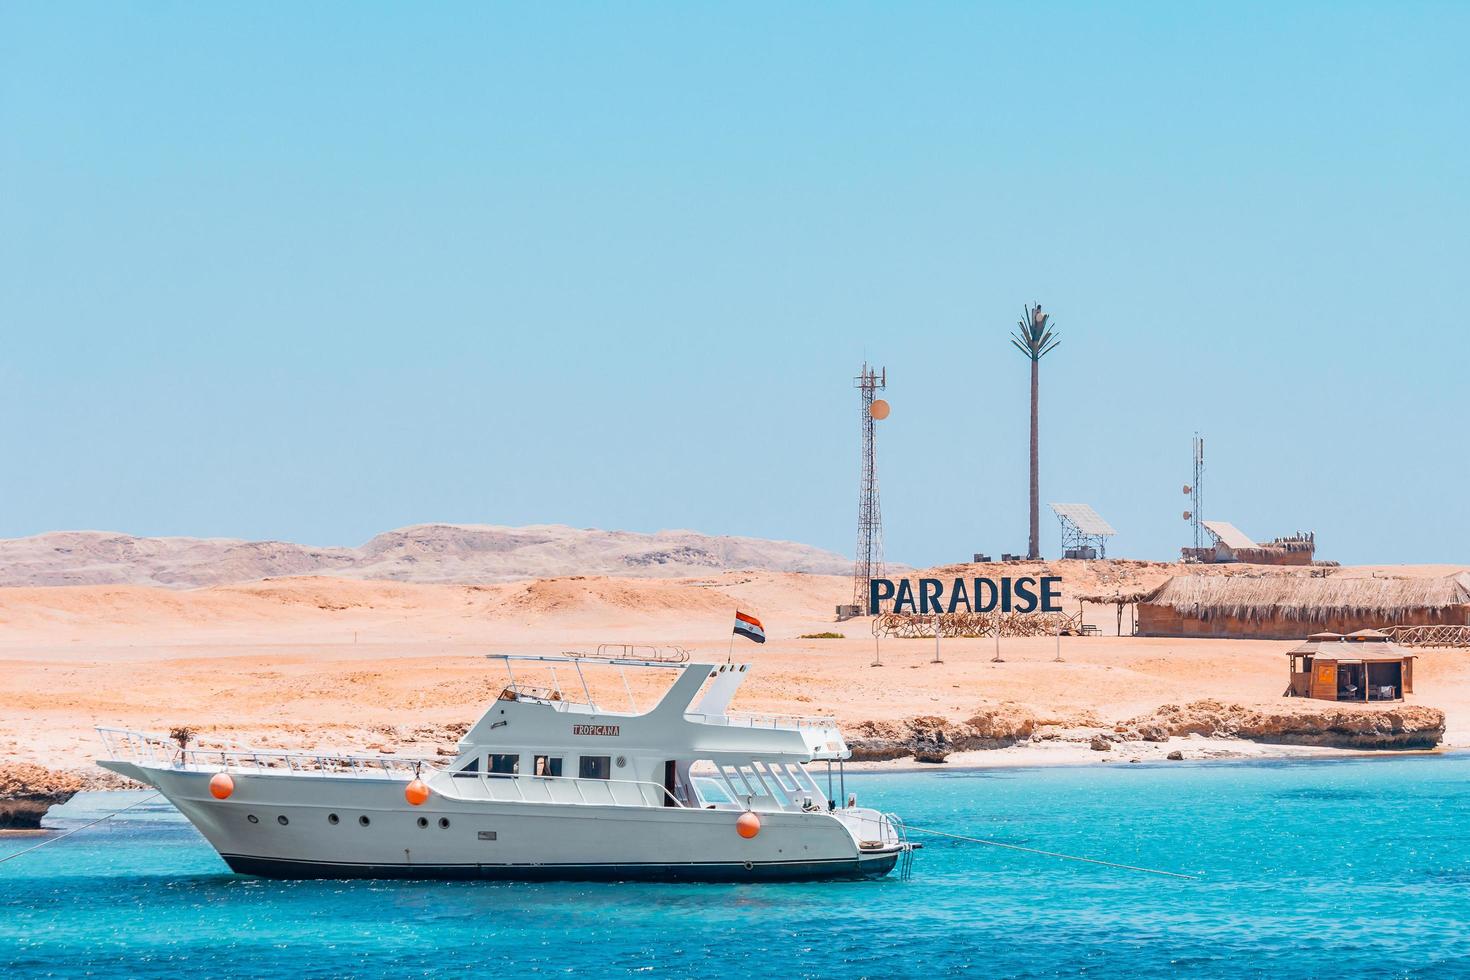 Hurghada, Egypt - August 3, 2014 White ship near Paradise Island photo